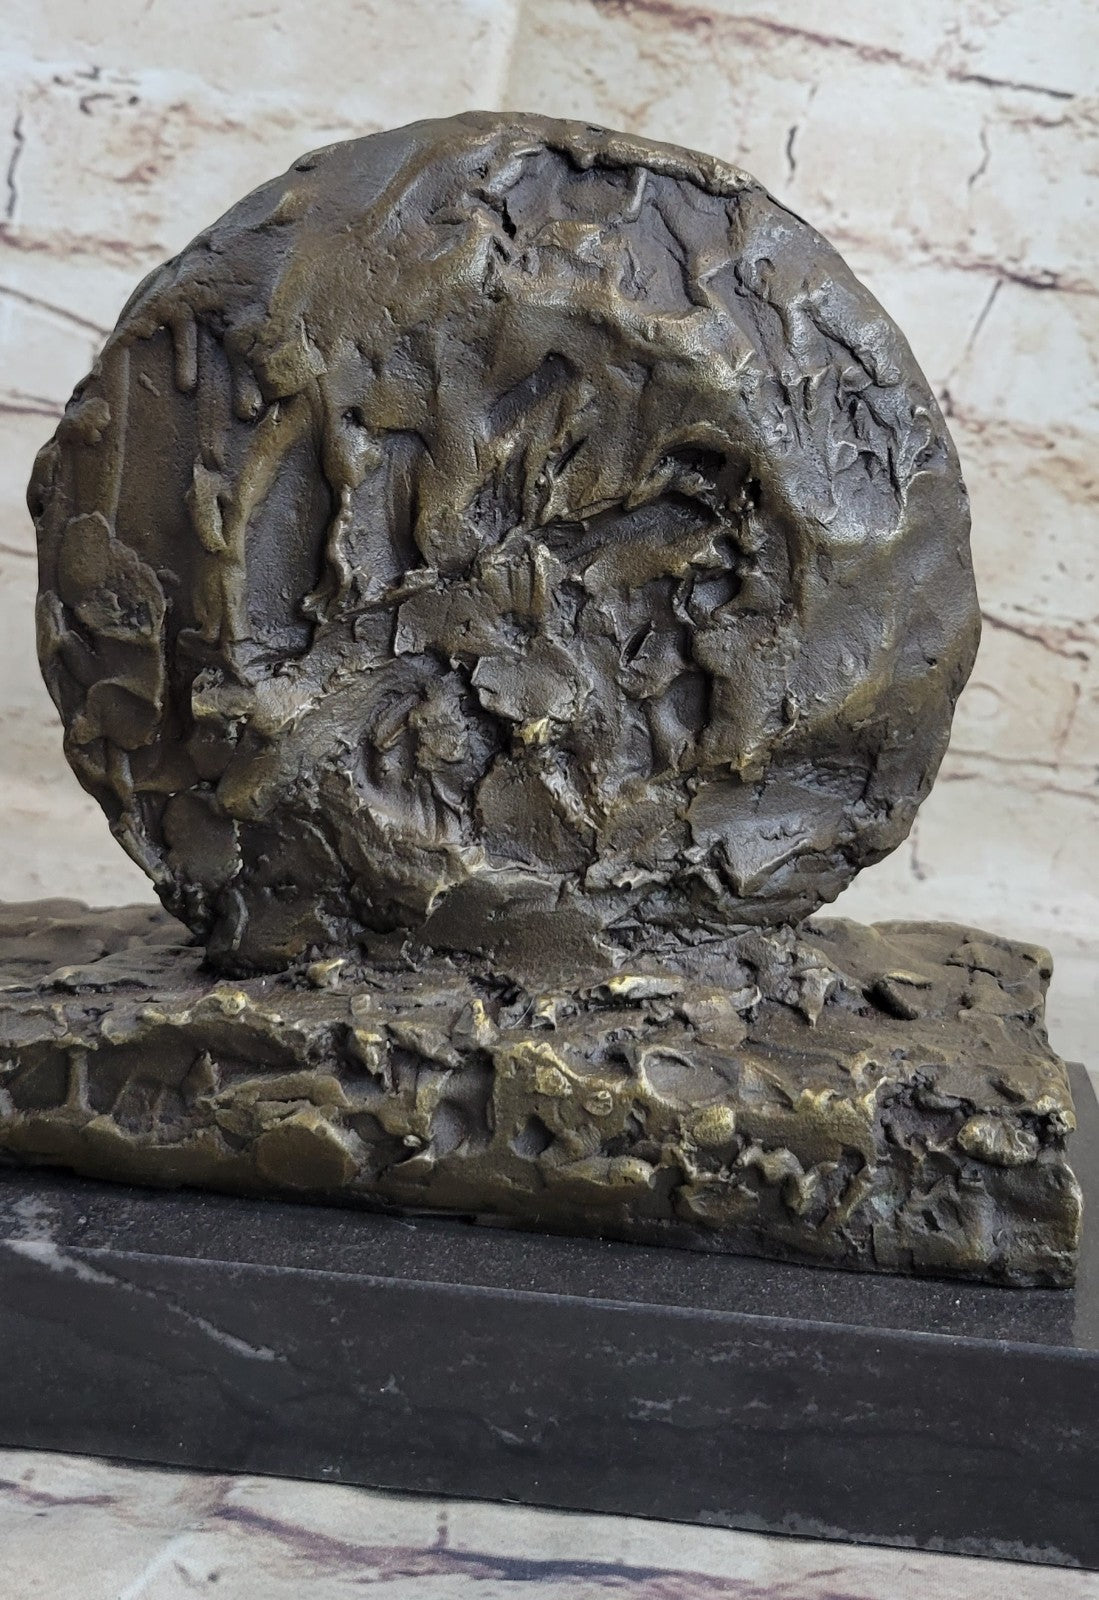 Bronze Sculpture Tribute Museum Quality Marble Base Figurine Figure Hot Cast